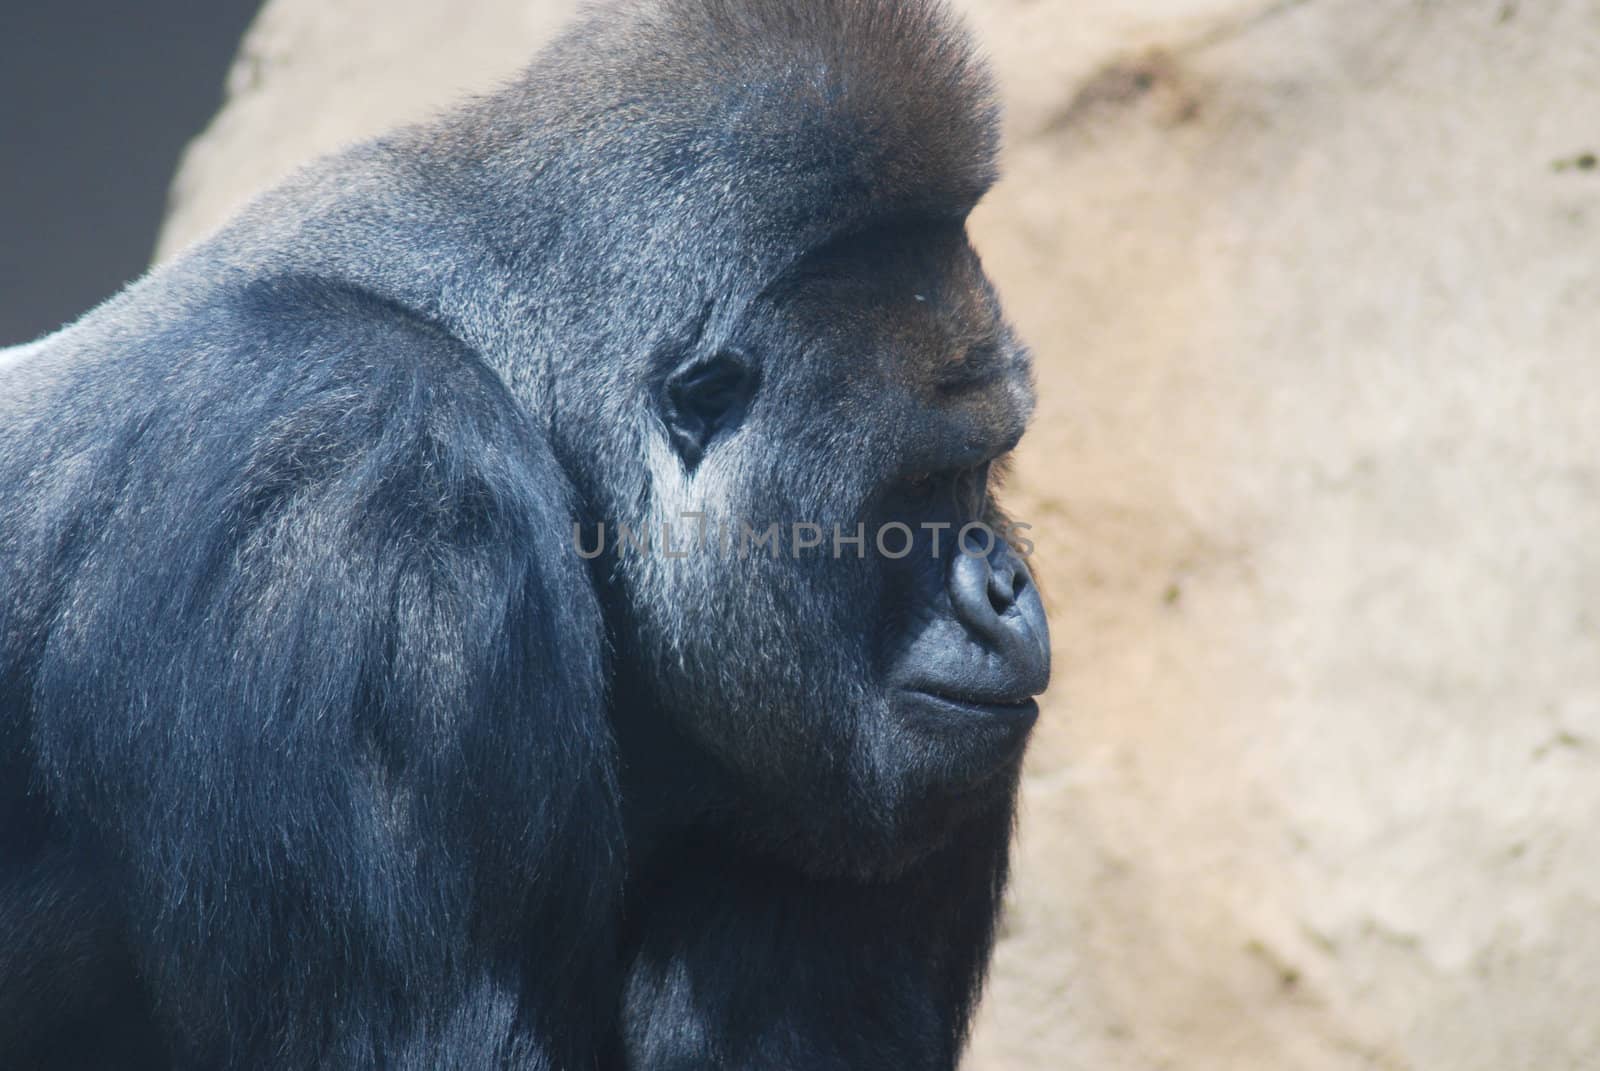 close-up of a big black hairy gorilla  by svtrotof